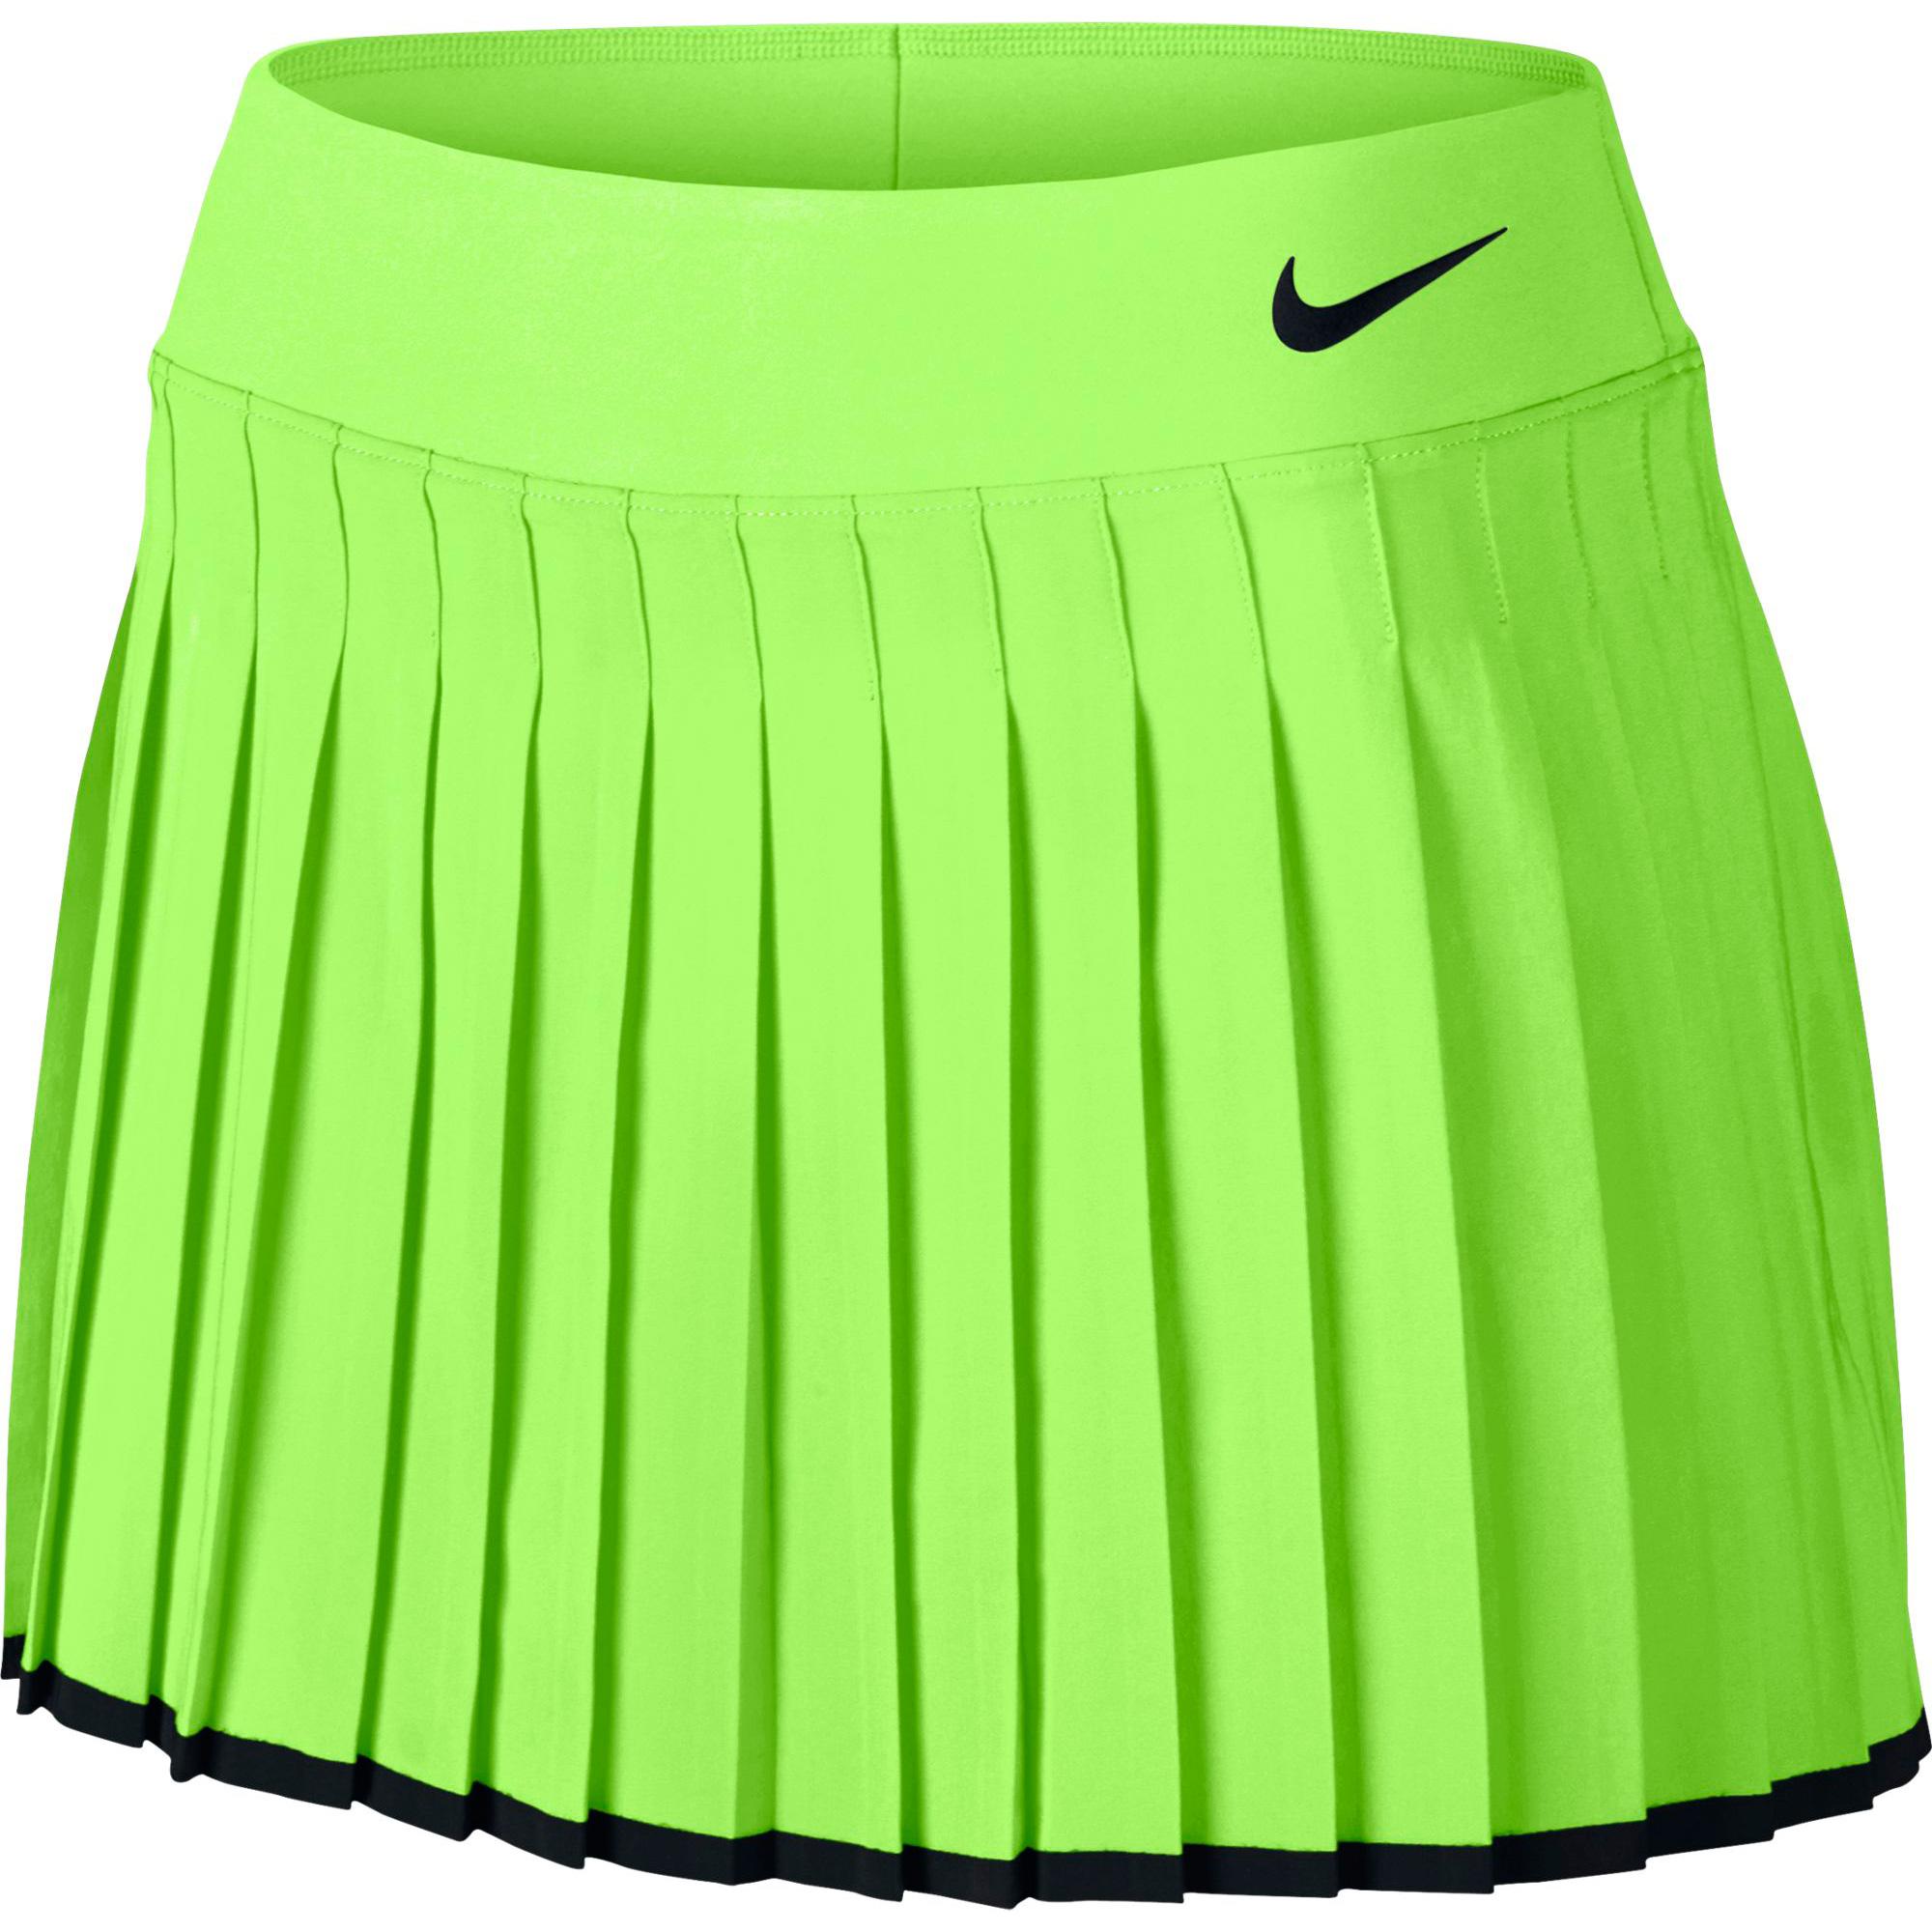 Длинные юбки на вайлдберриз. Юбка для тенниса Nike. Теннисная юбка найк. Теннисная юбка адидас. Nike теннисная юбка 2020.